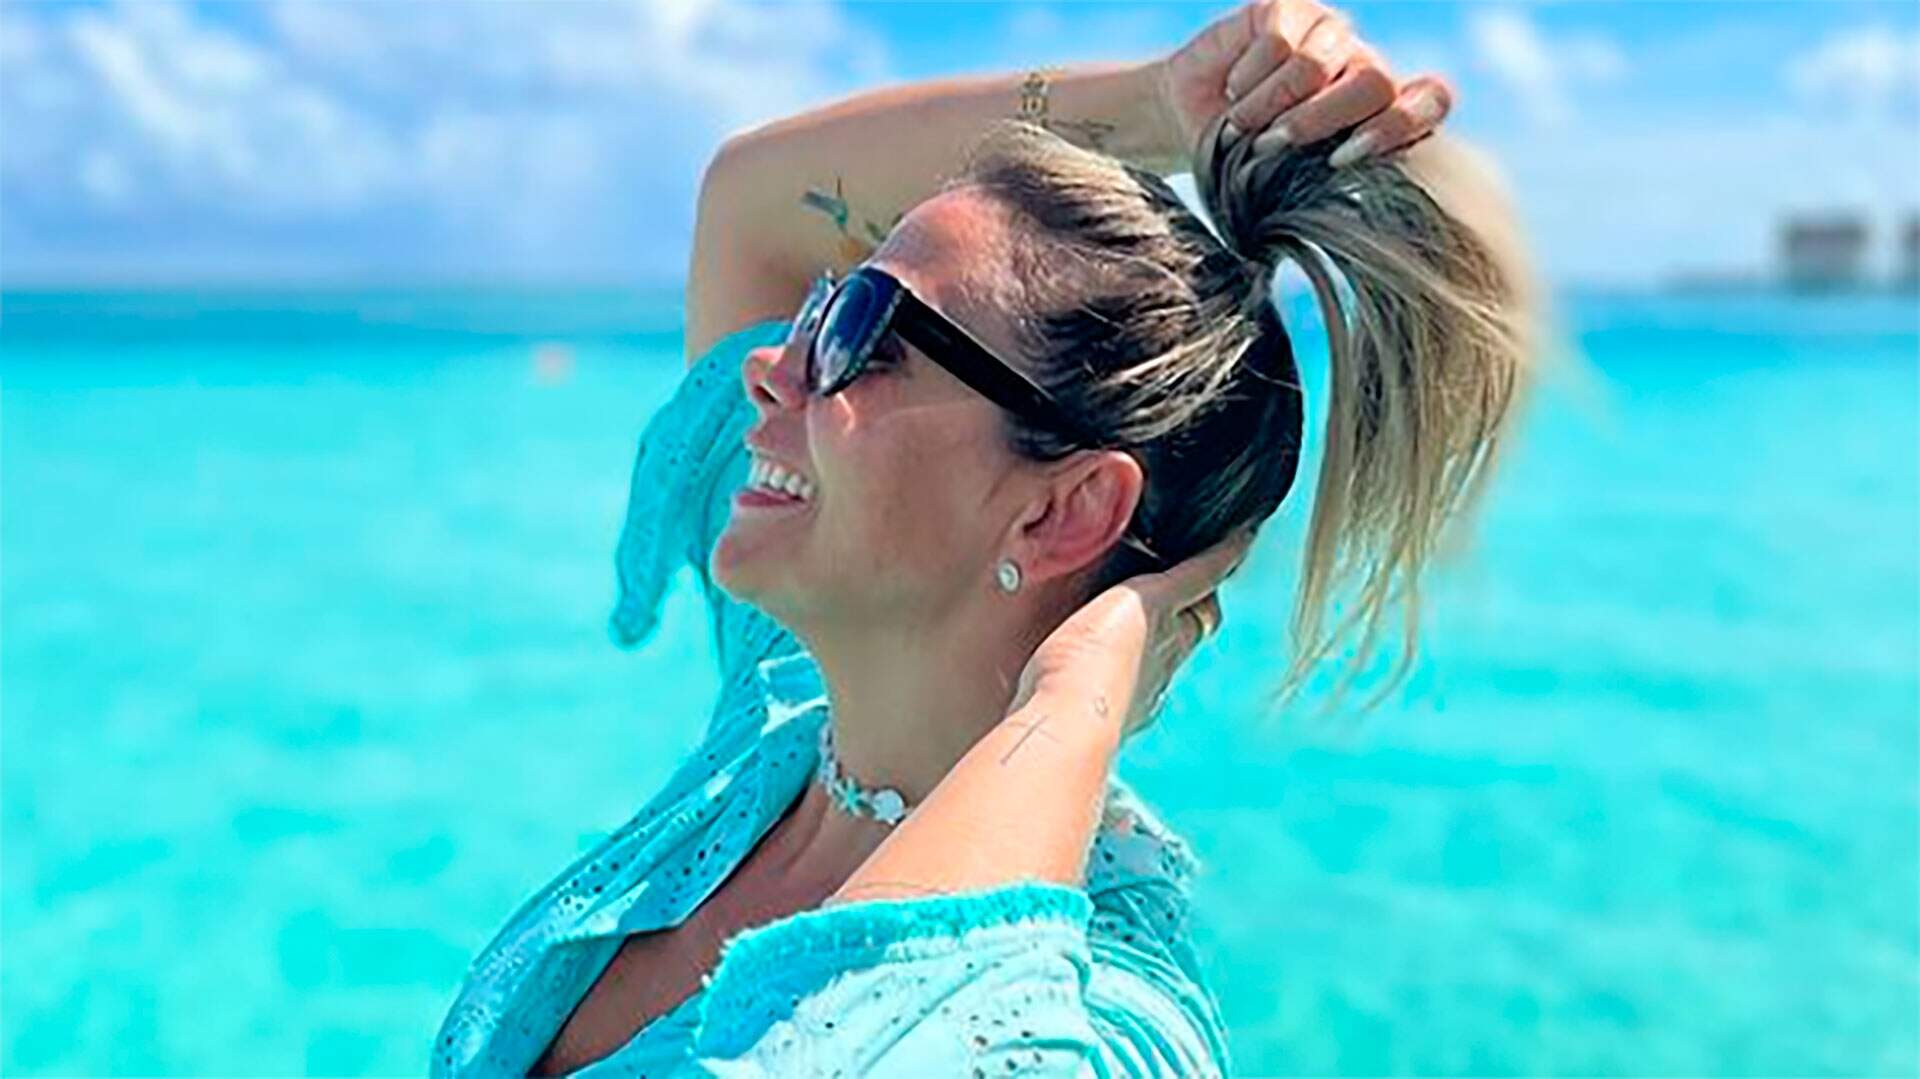 Aos 44 anos, Carla Perez gera tumulto na praia com look minimalista: “Parou tudo” - Metropolitana FM